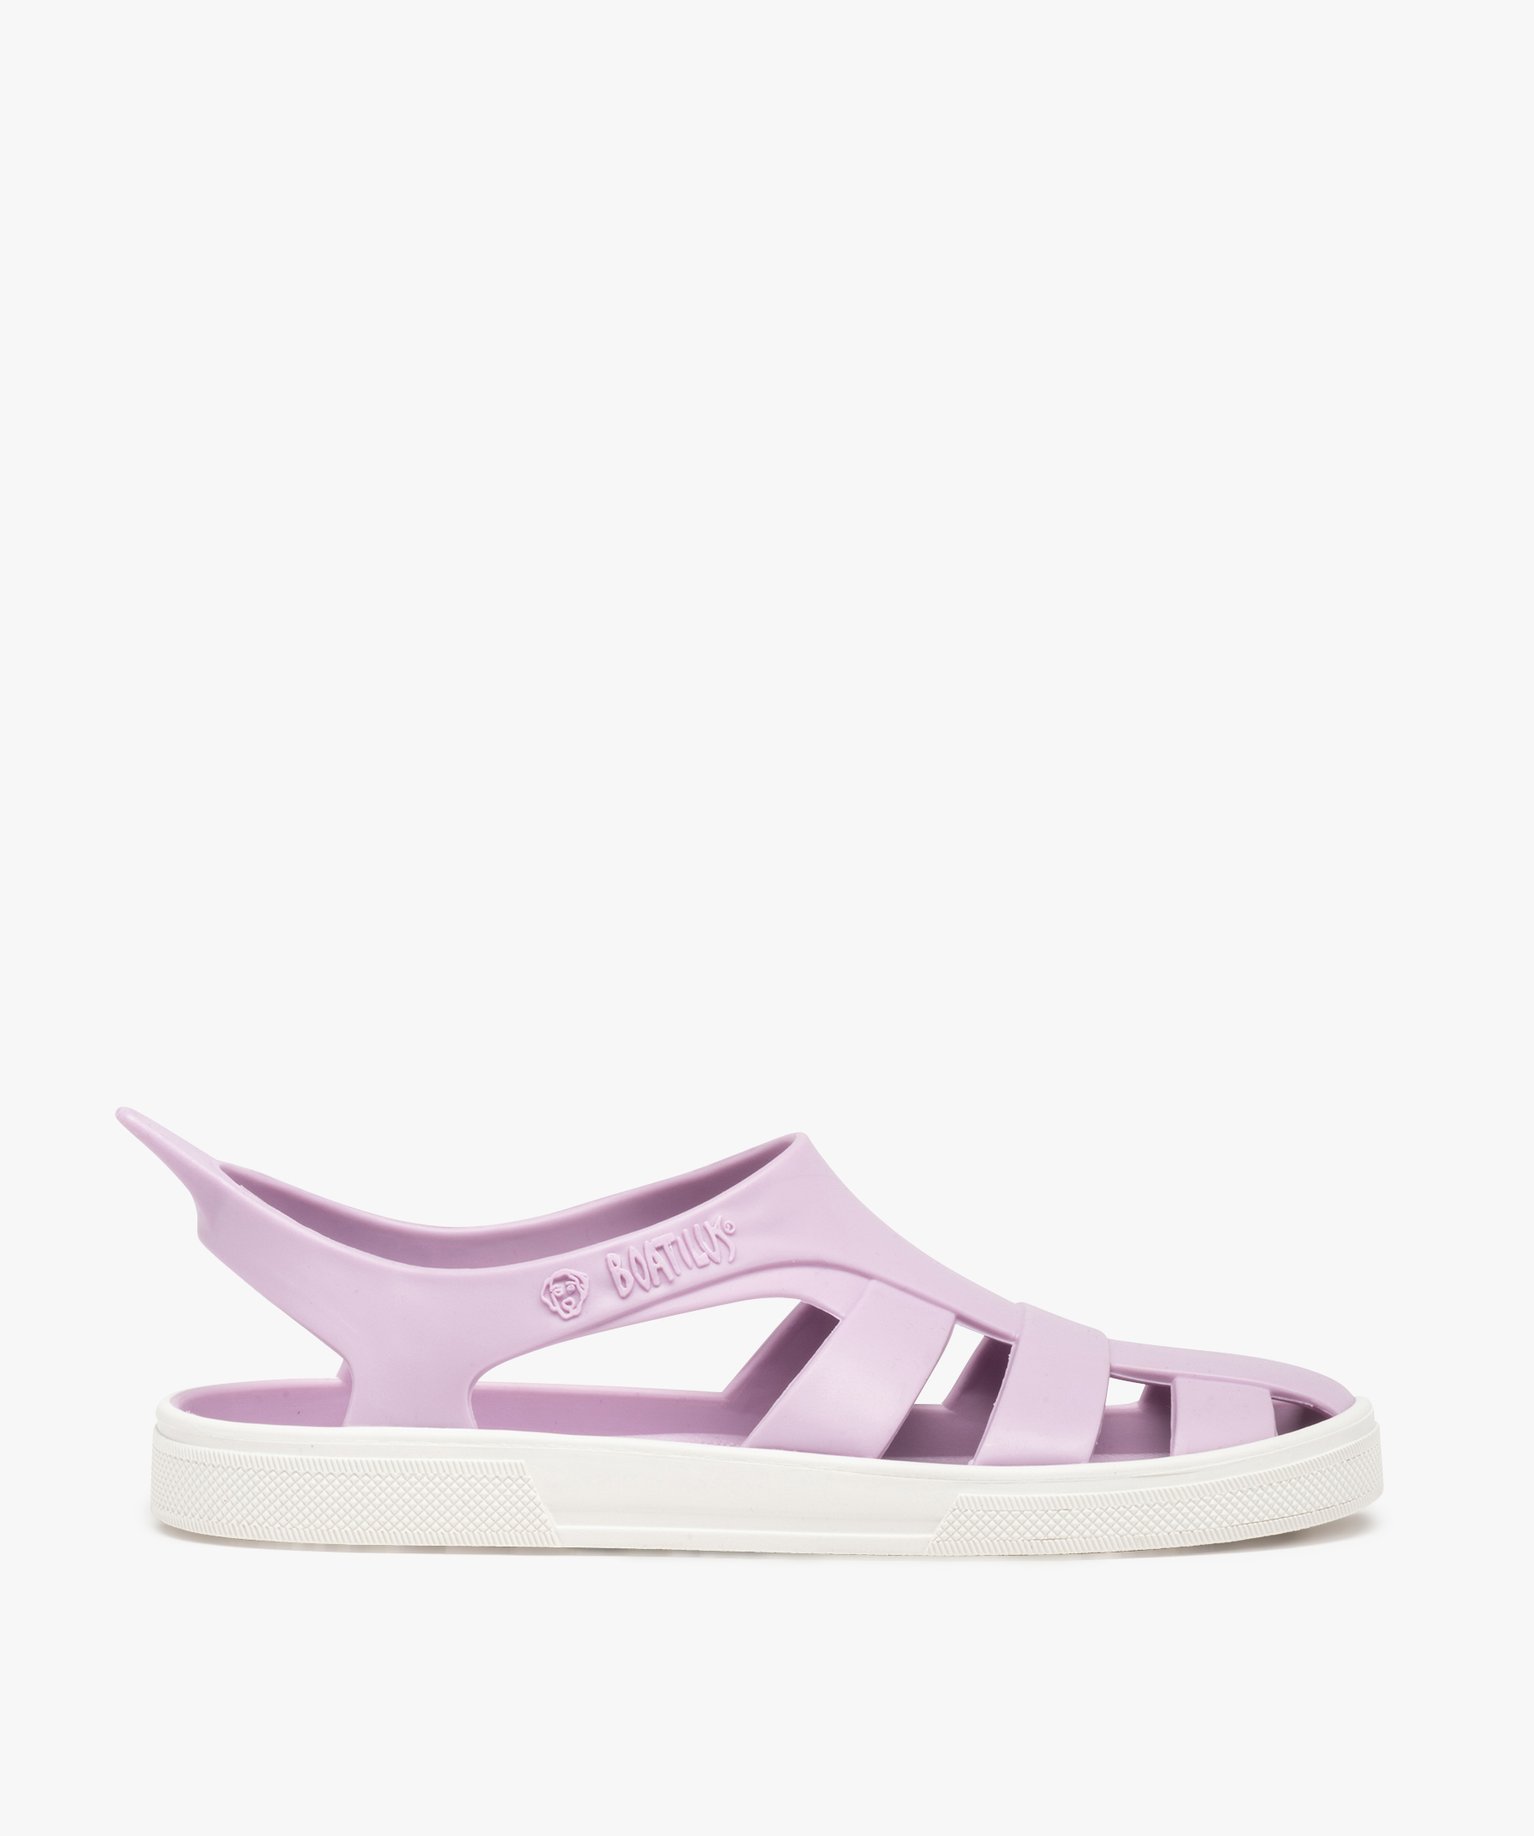 sandales de plage fille extra souples - boatilus violet